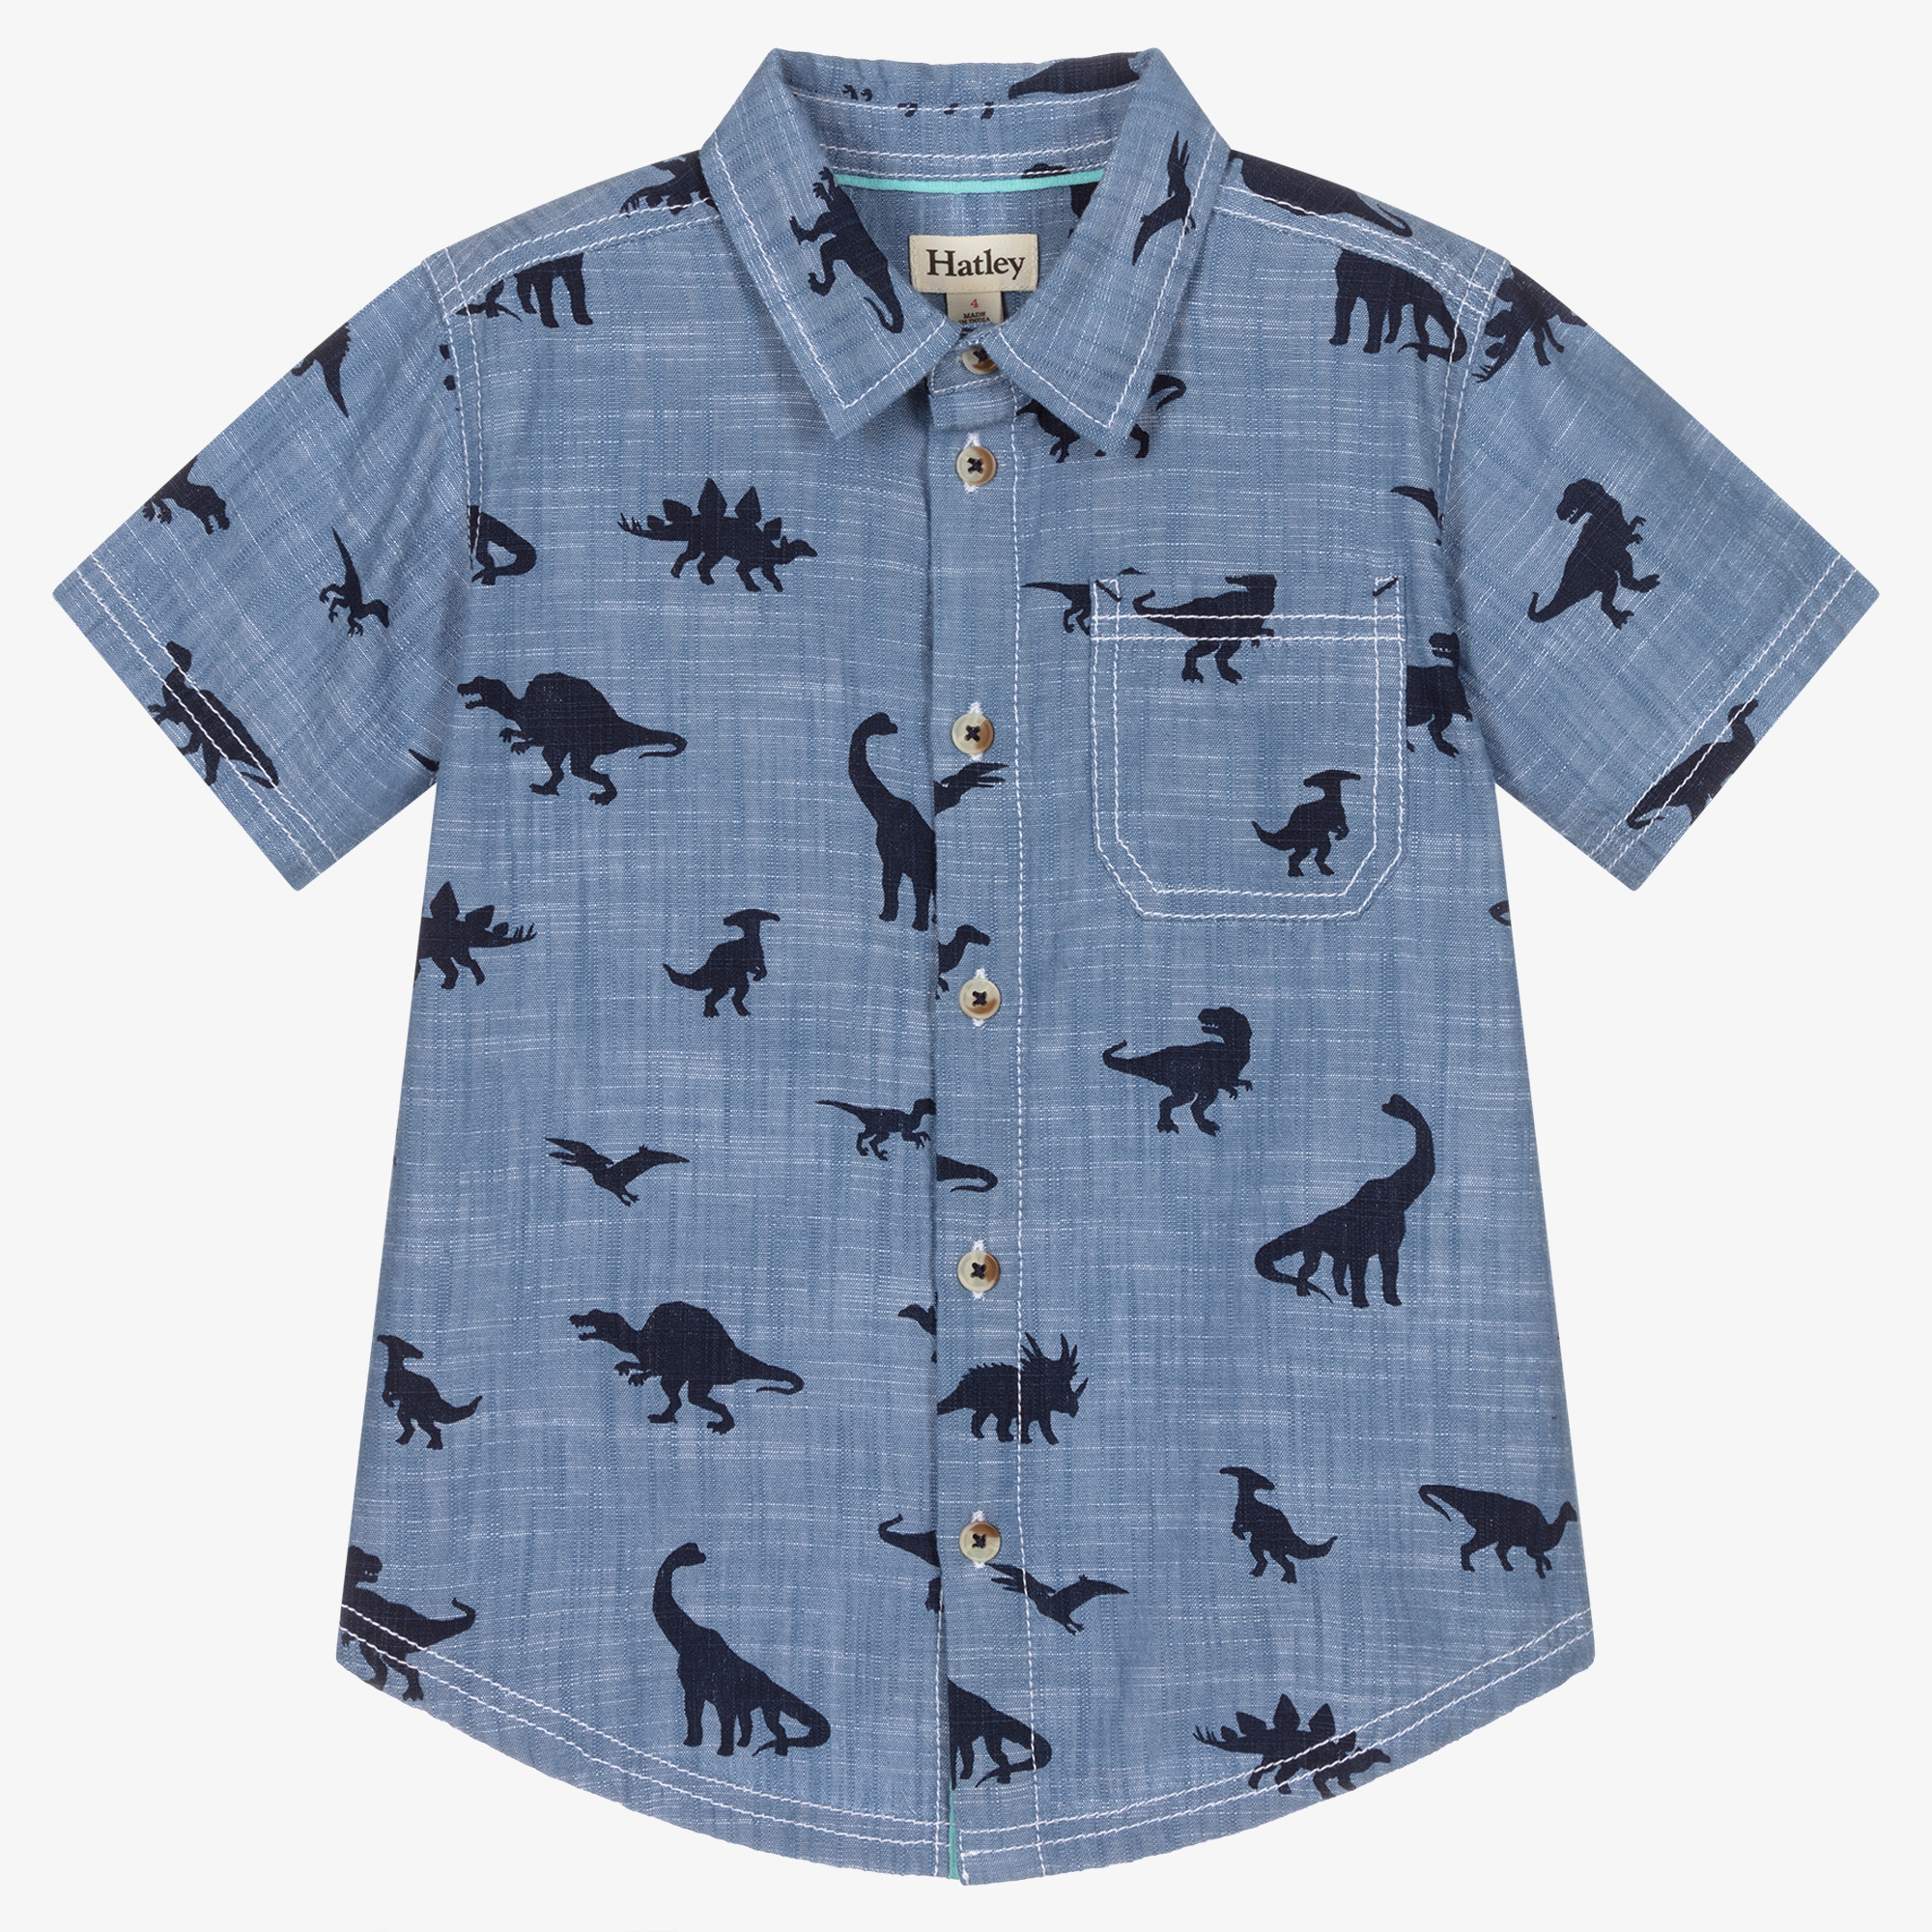 Hatley - Boys Ivory Cotton Dinosaur T-Shirt